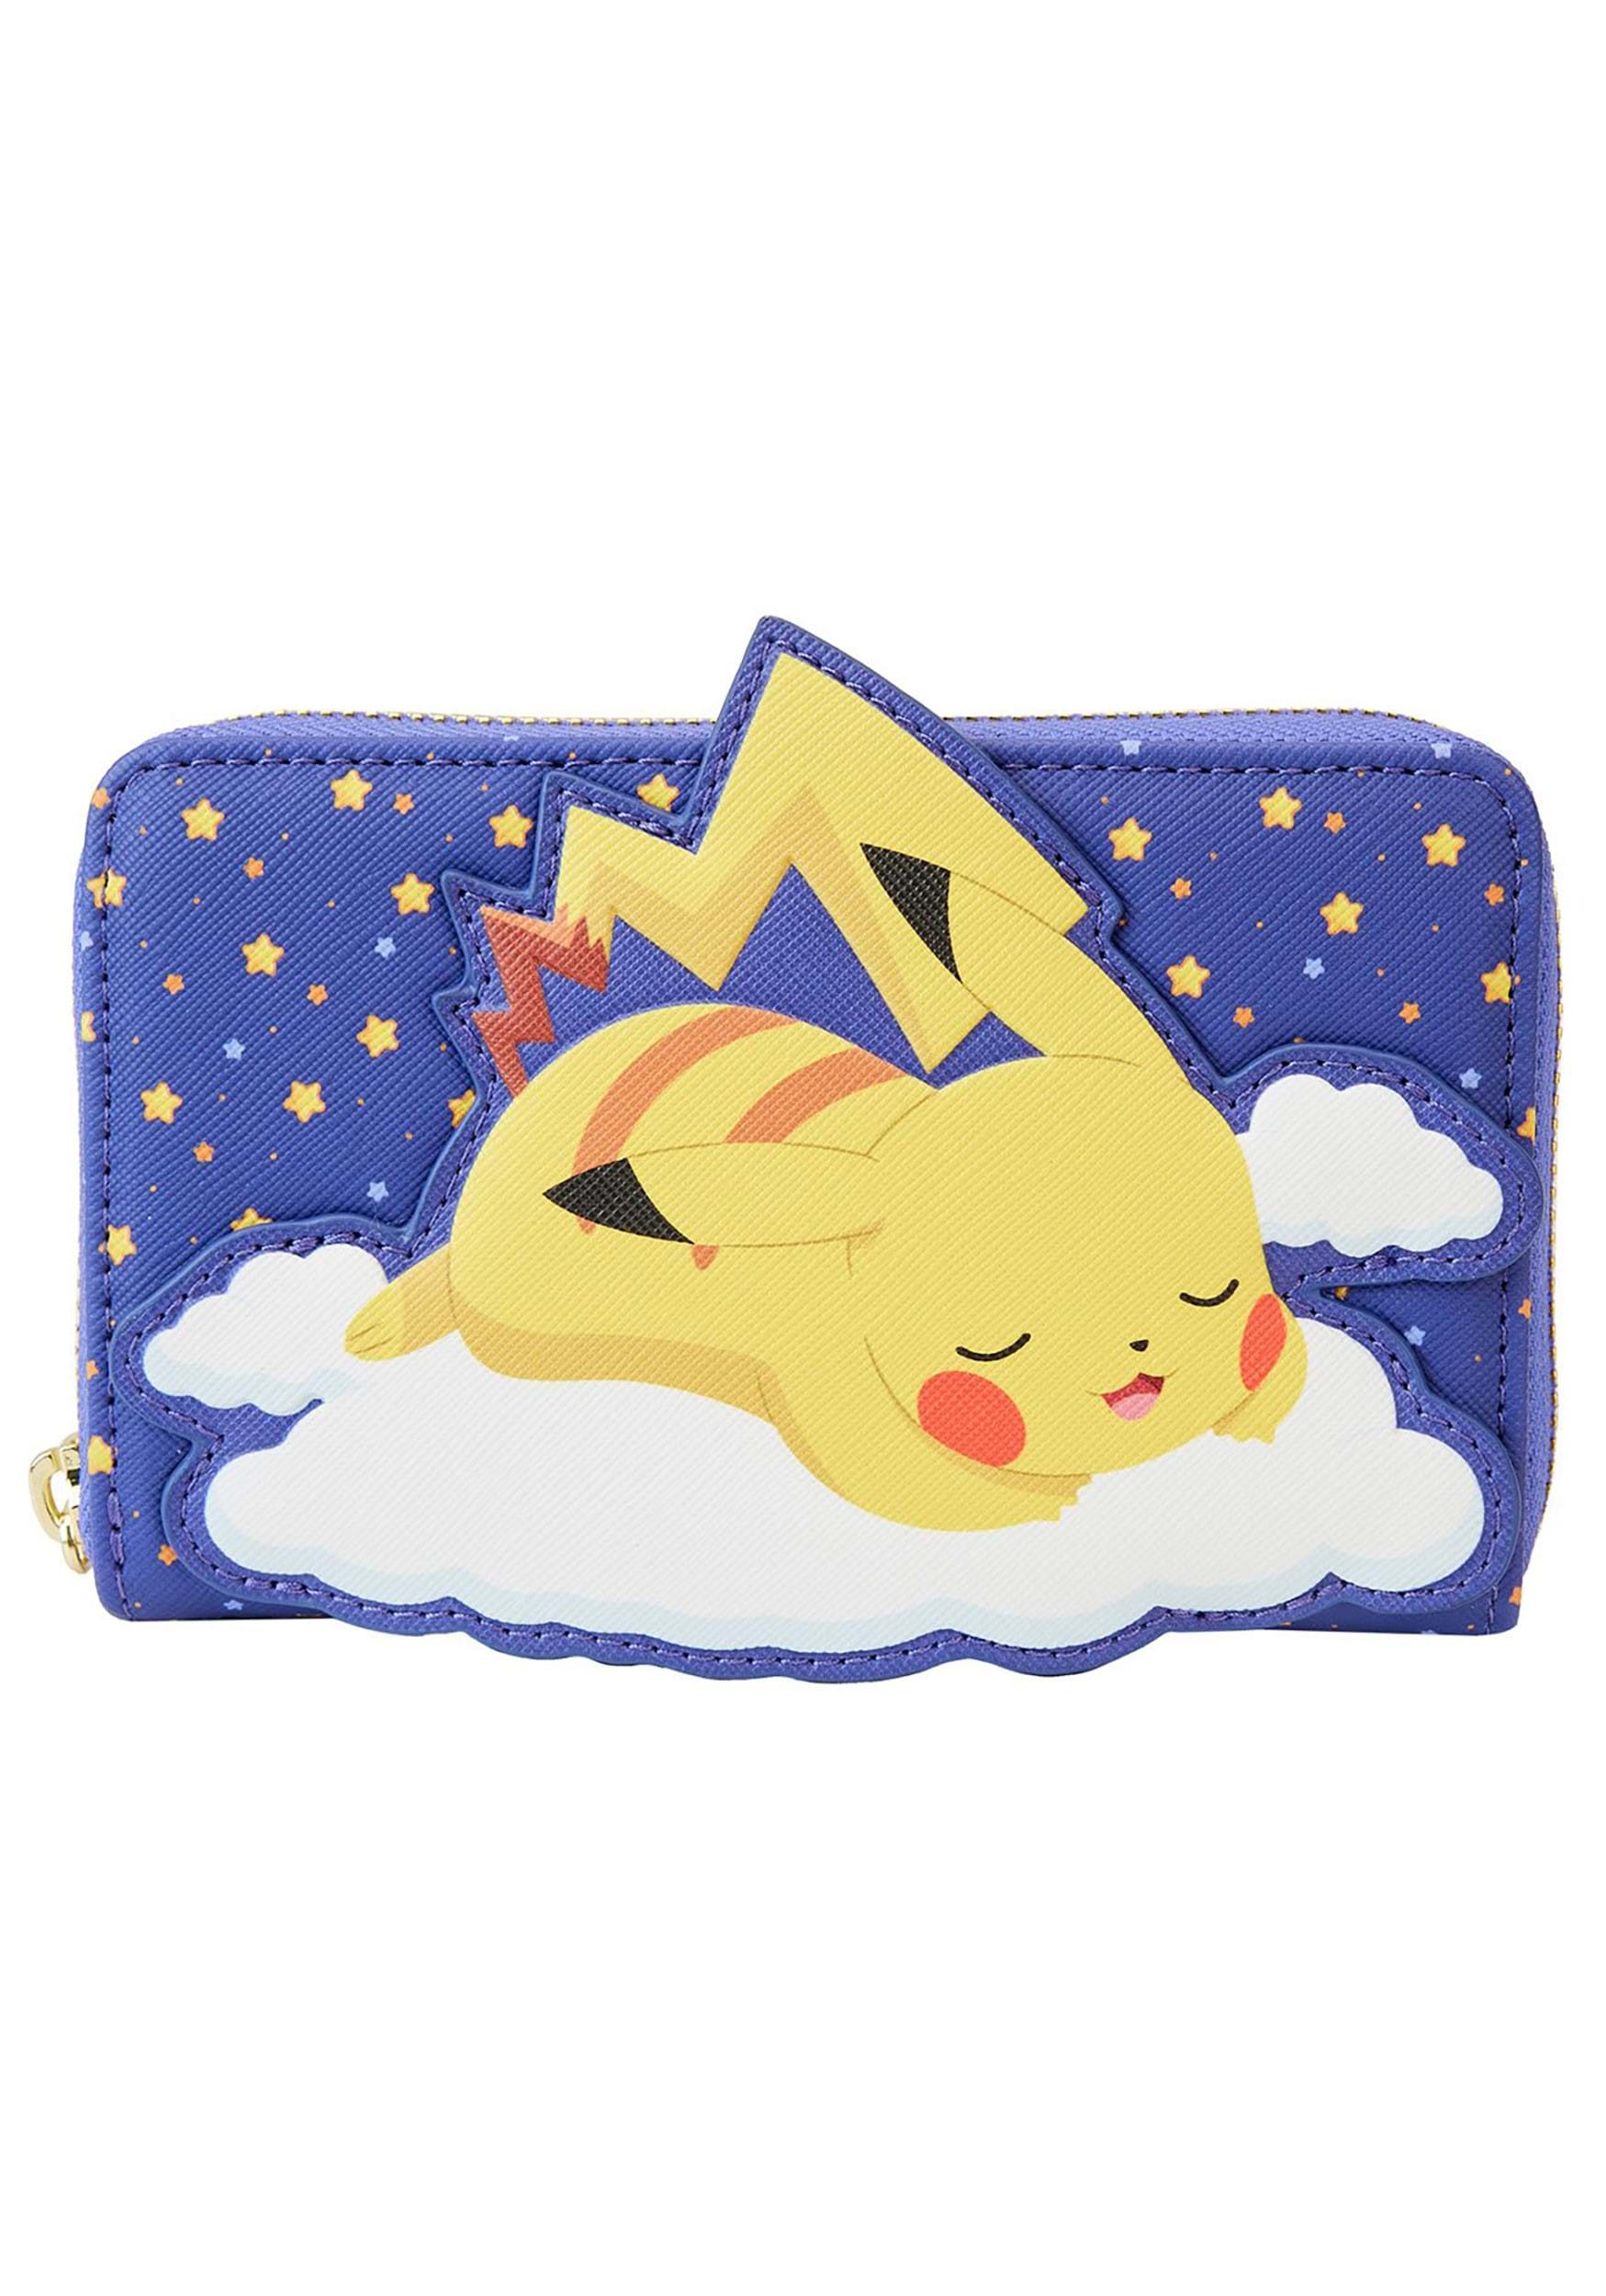 Loungefly Pokémon Sleeping Pikachu and Friends Wallet | Pokémon Wallets